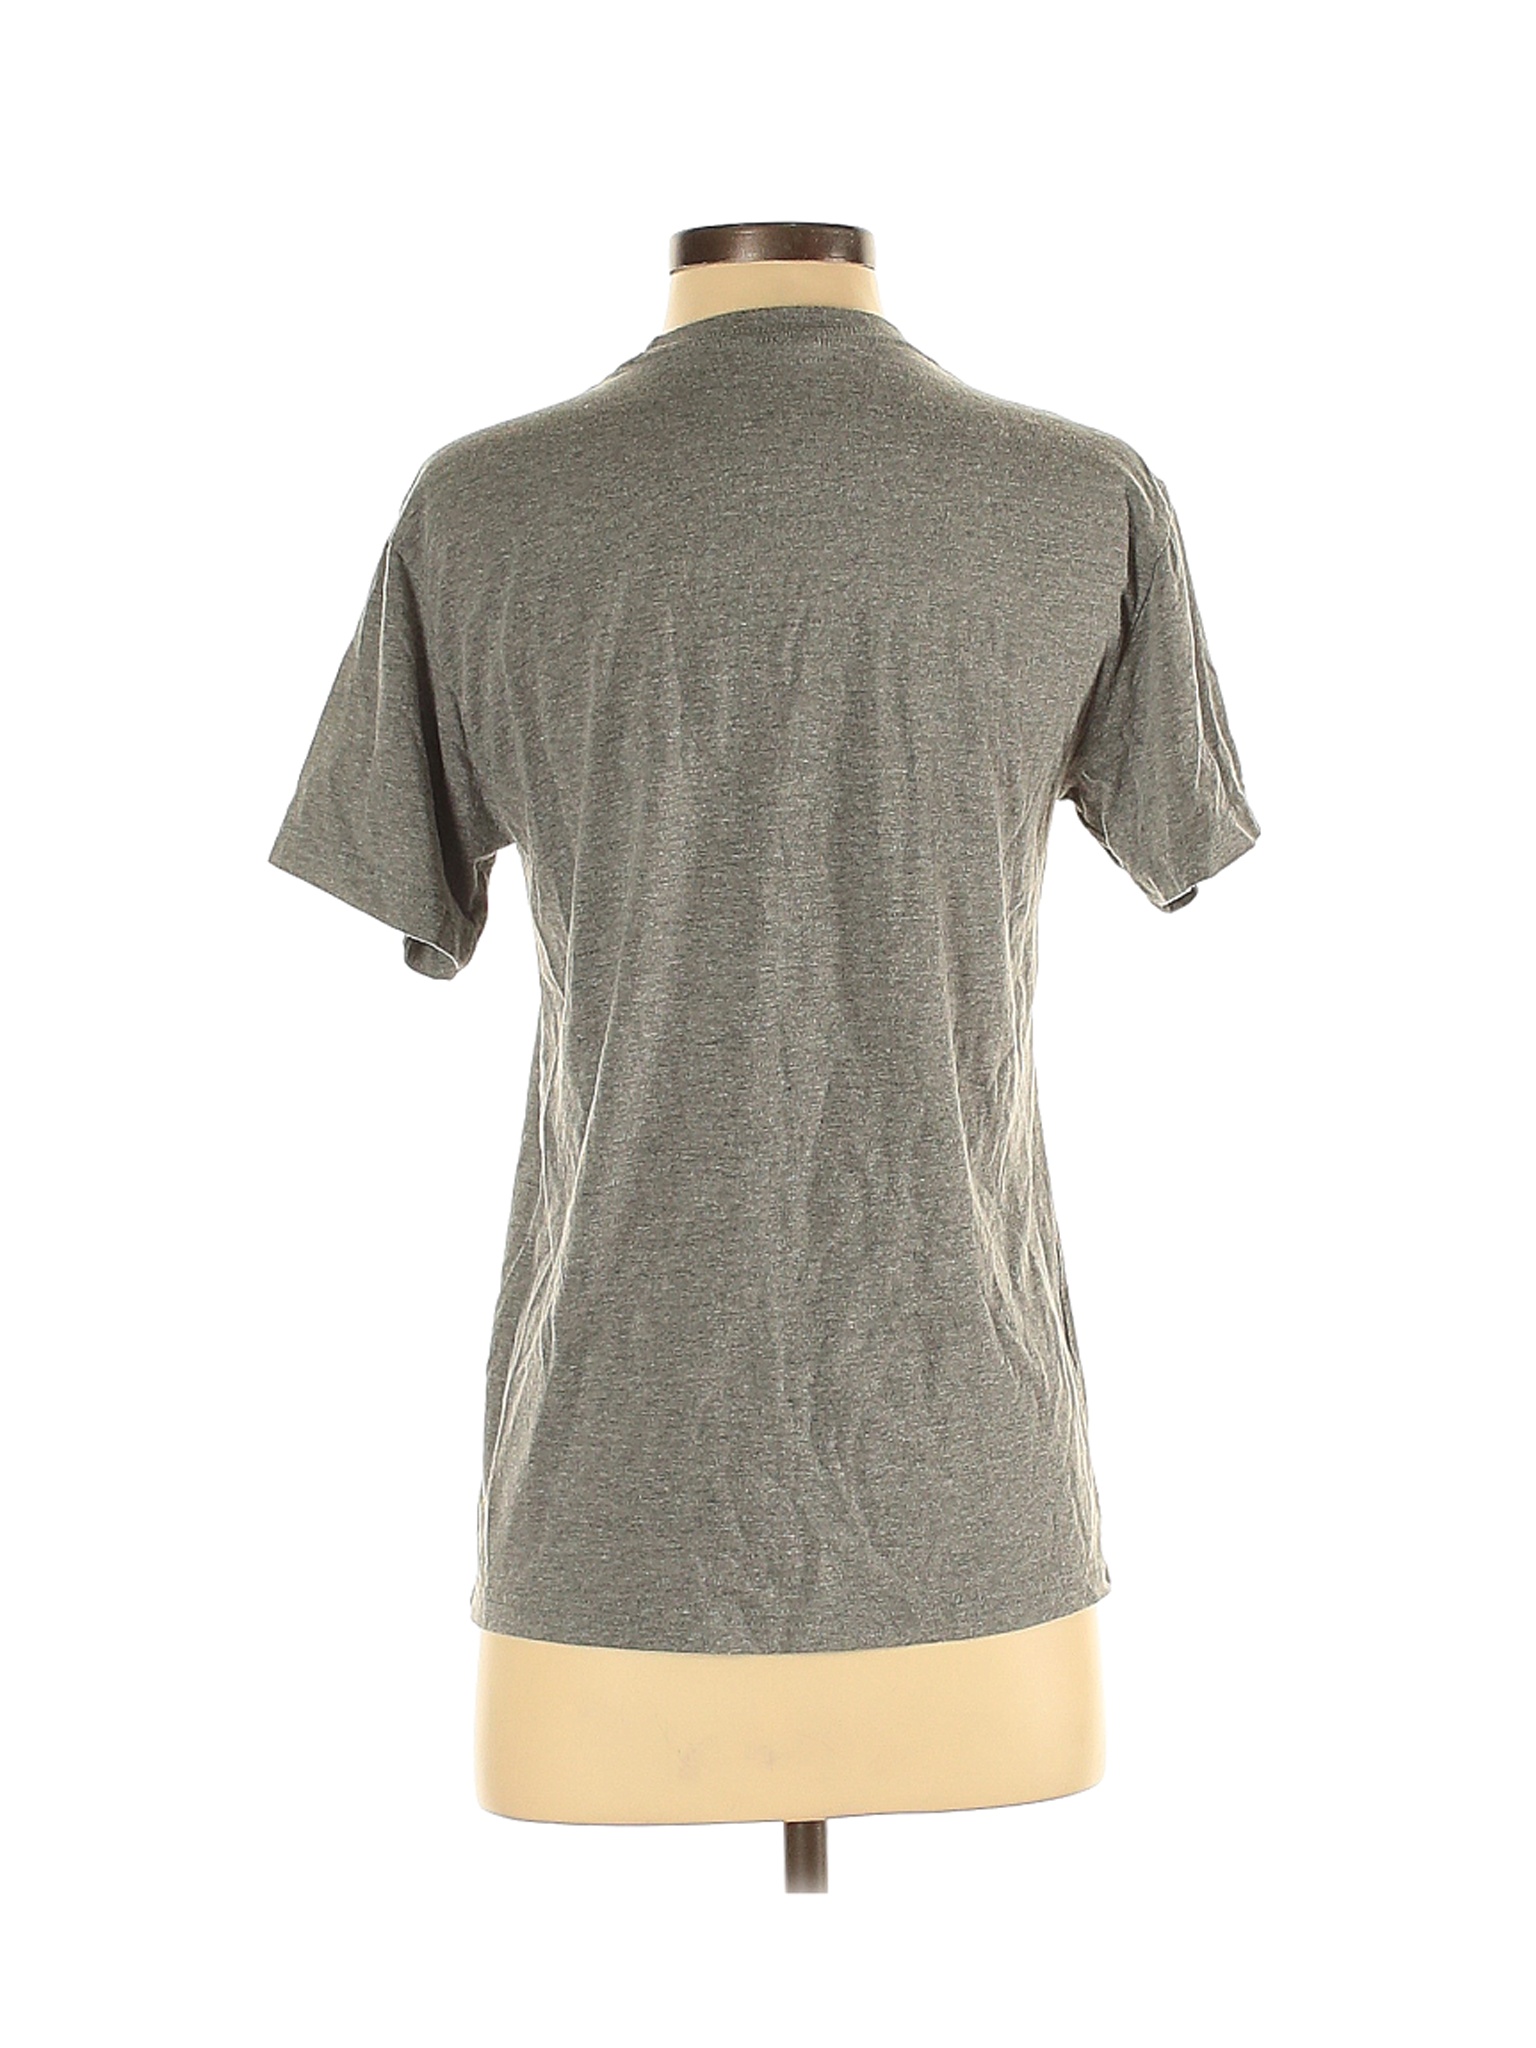 Next Level Apparel Women Gray Short Sleeve T-Shirt S | eBay